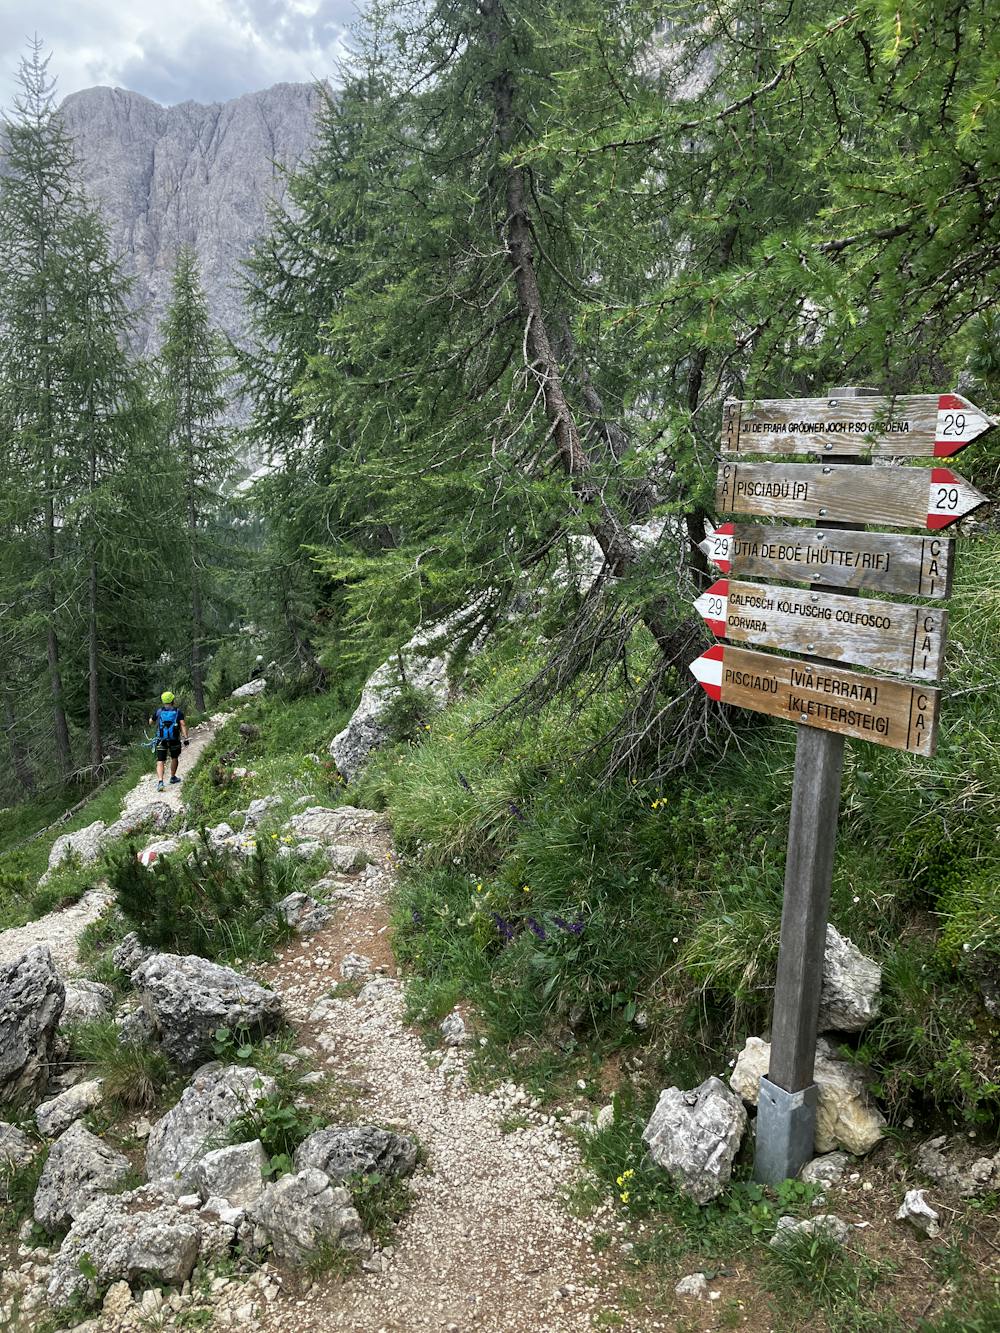 The trail leading towards the via ferrata